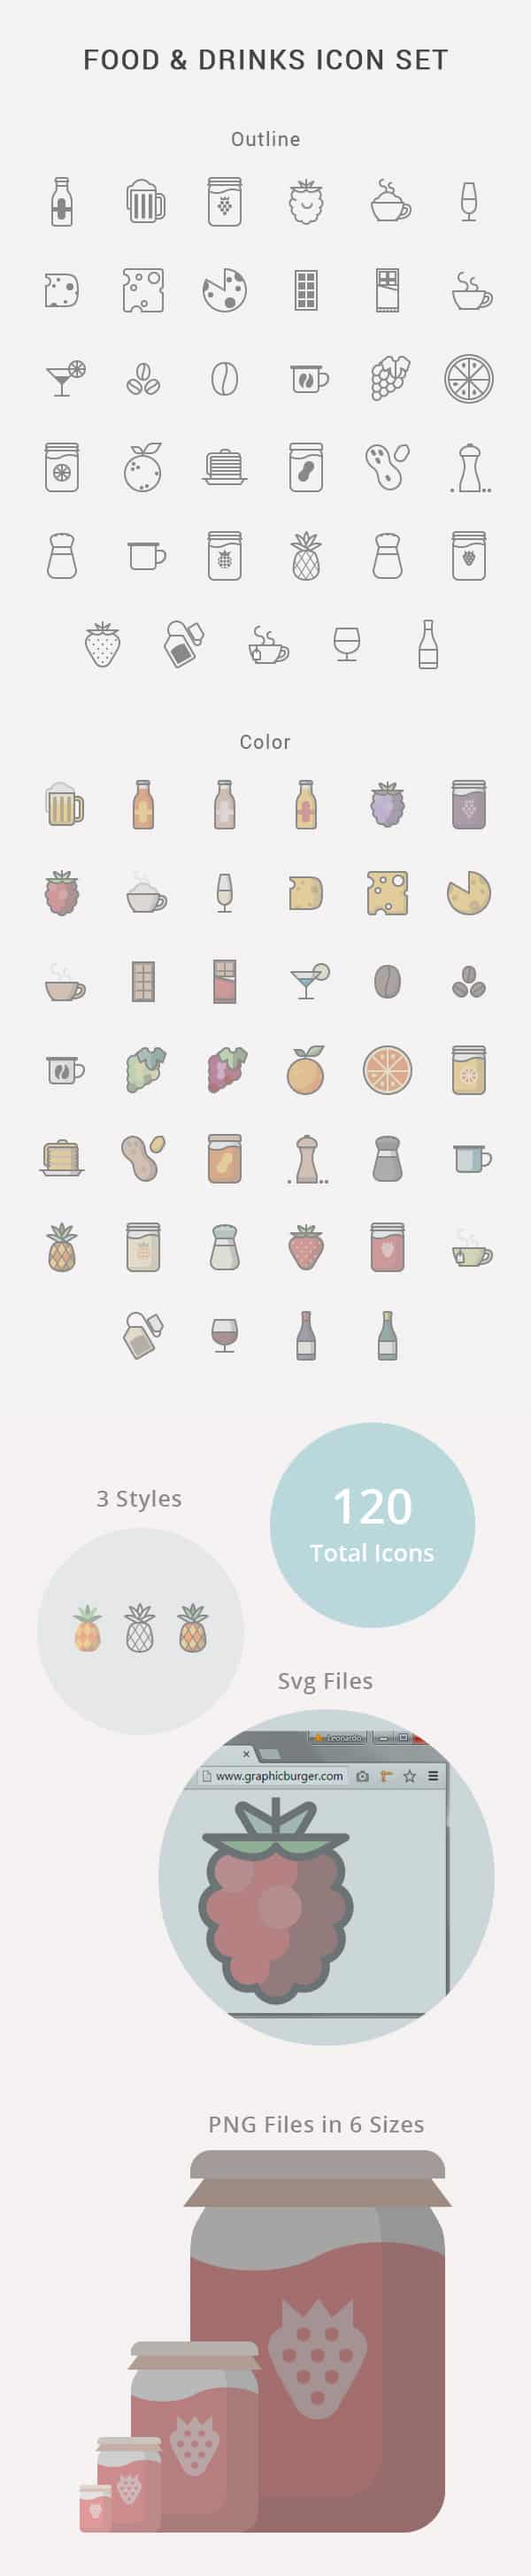 food-drinks-icons